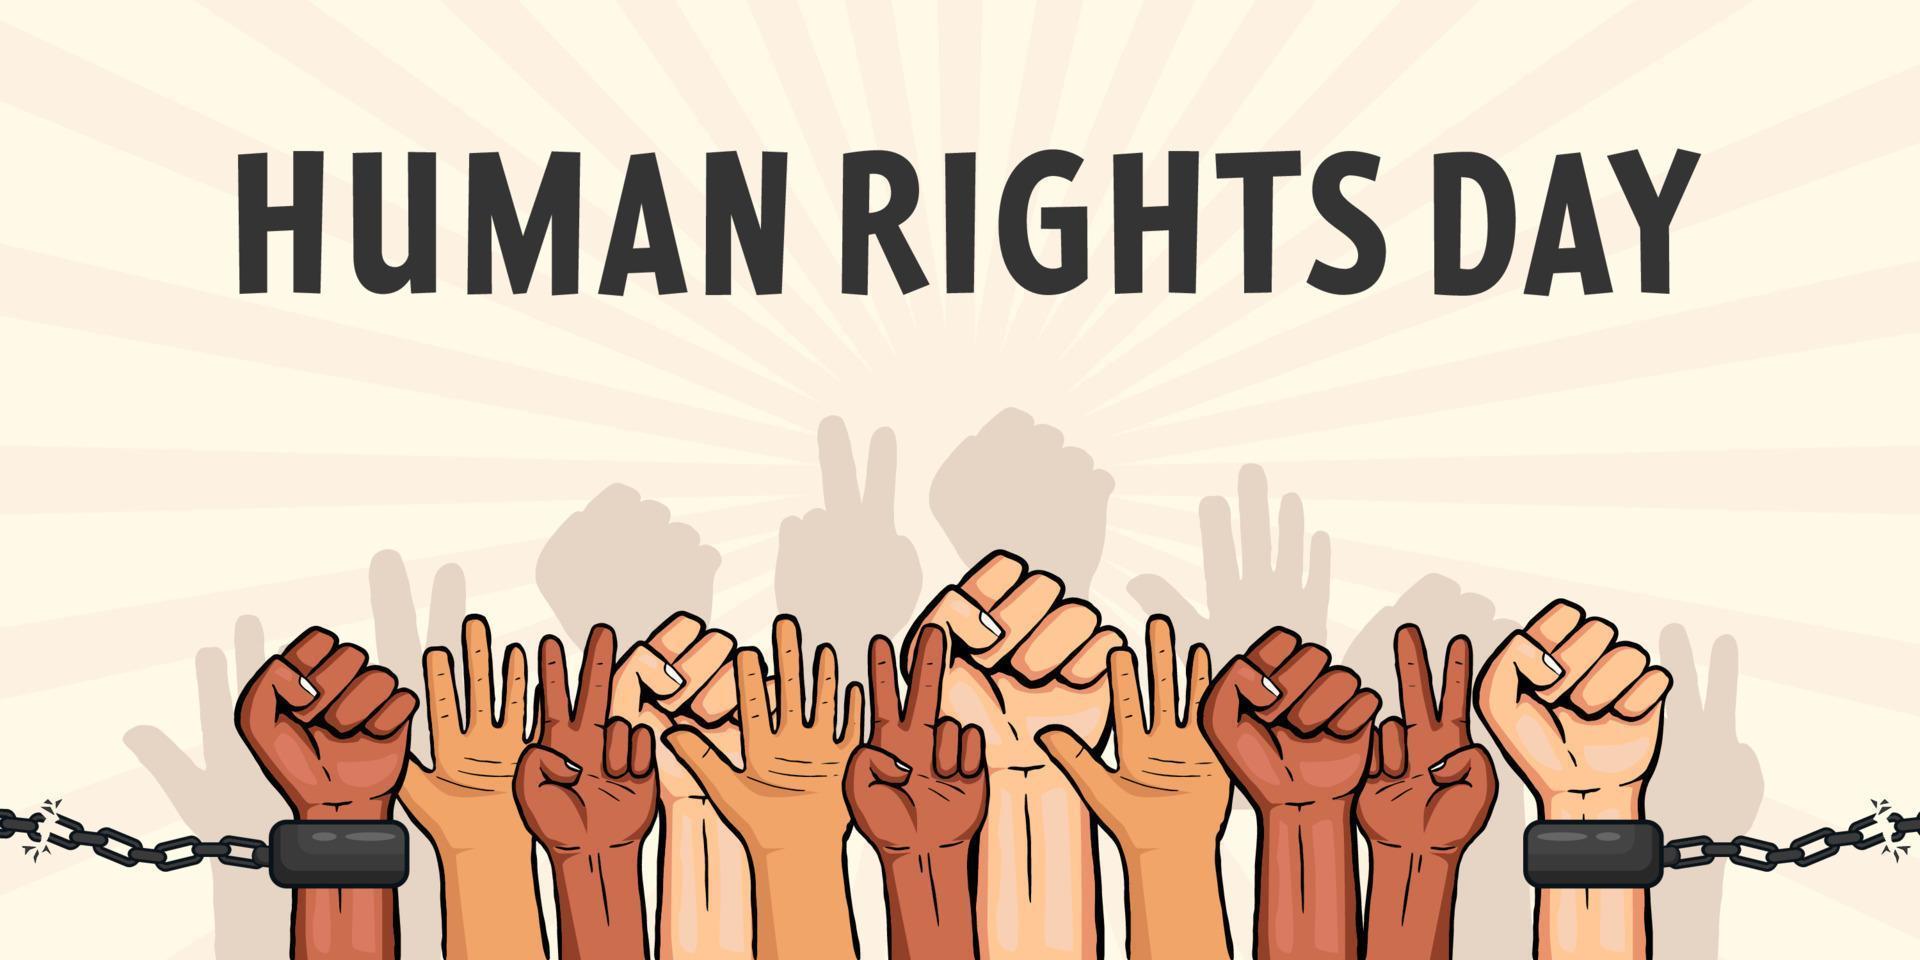 human rights day horizontal banner illustration vector